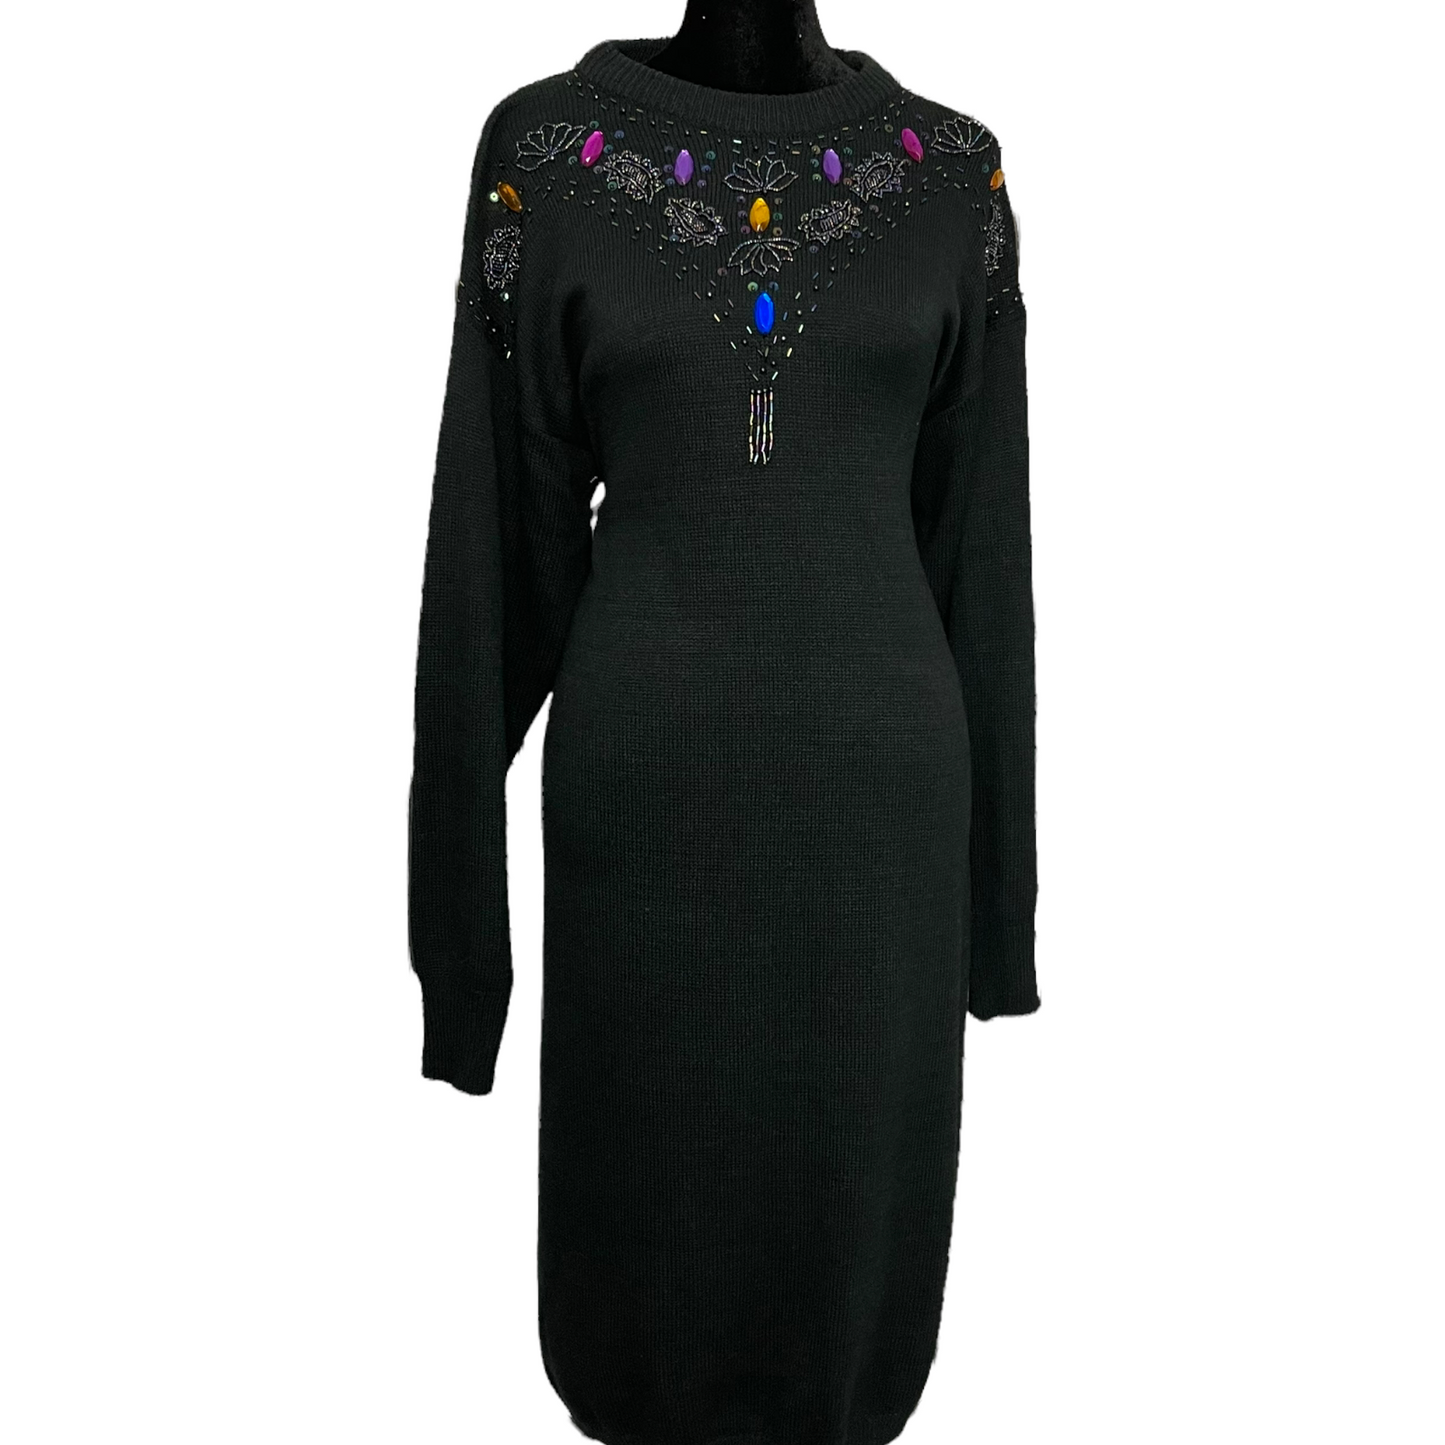 PHR Basics By Southern Classics Black Sweater Dress Size Medium Embellished Bead